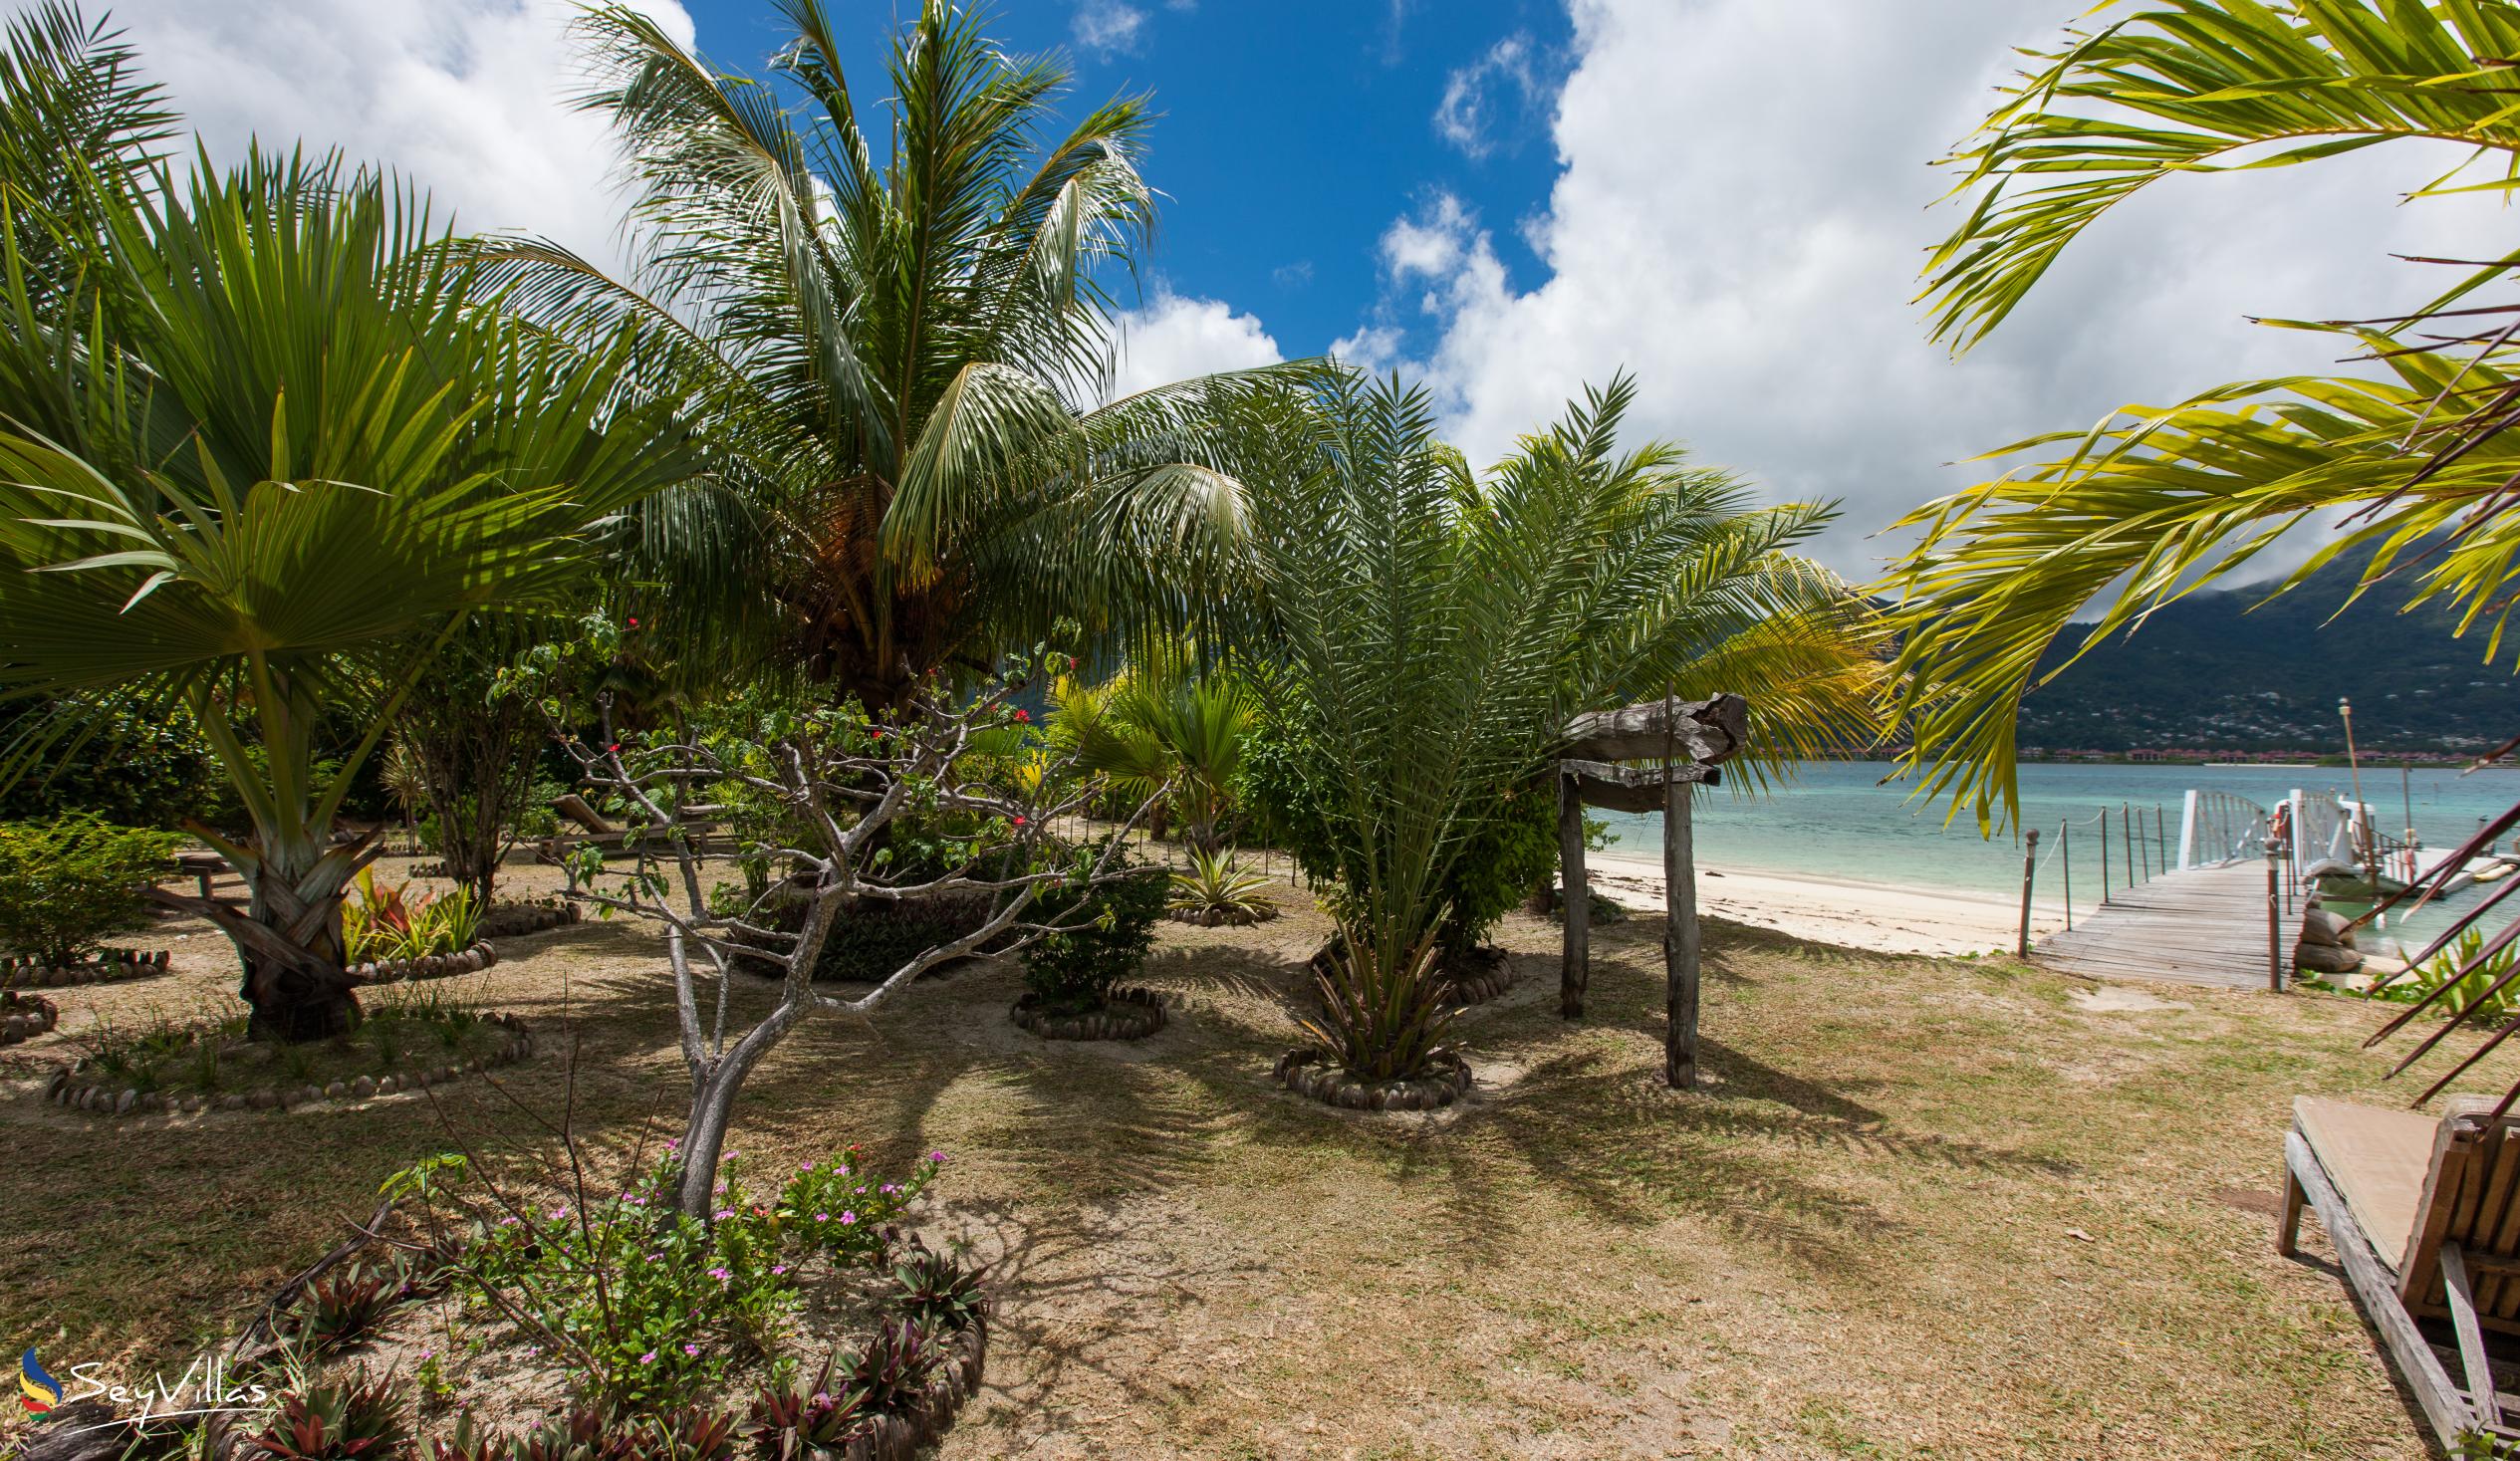 Photo 14: Villa de Cerf - Outdoor area - Cerf Island (Seychelles)